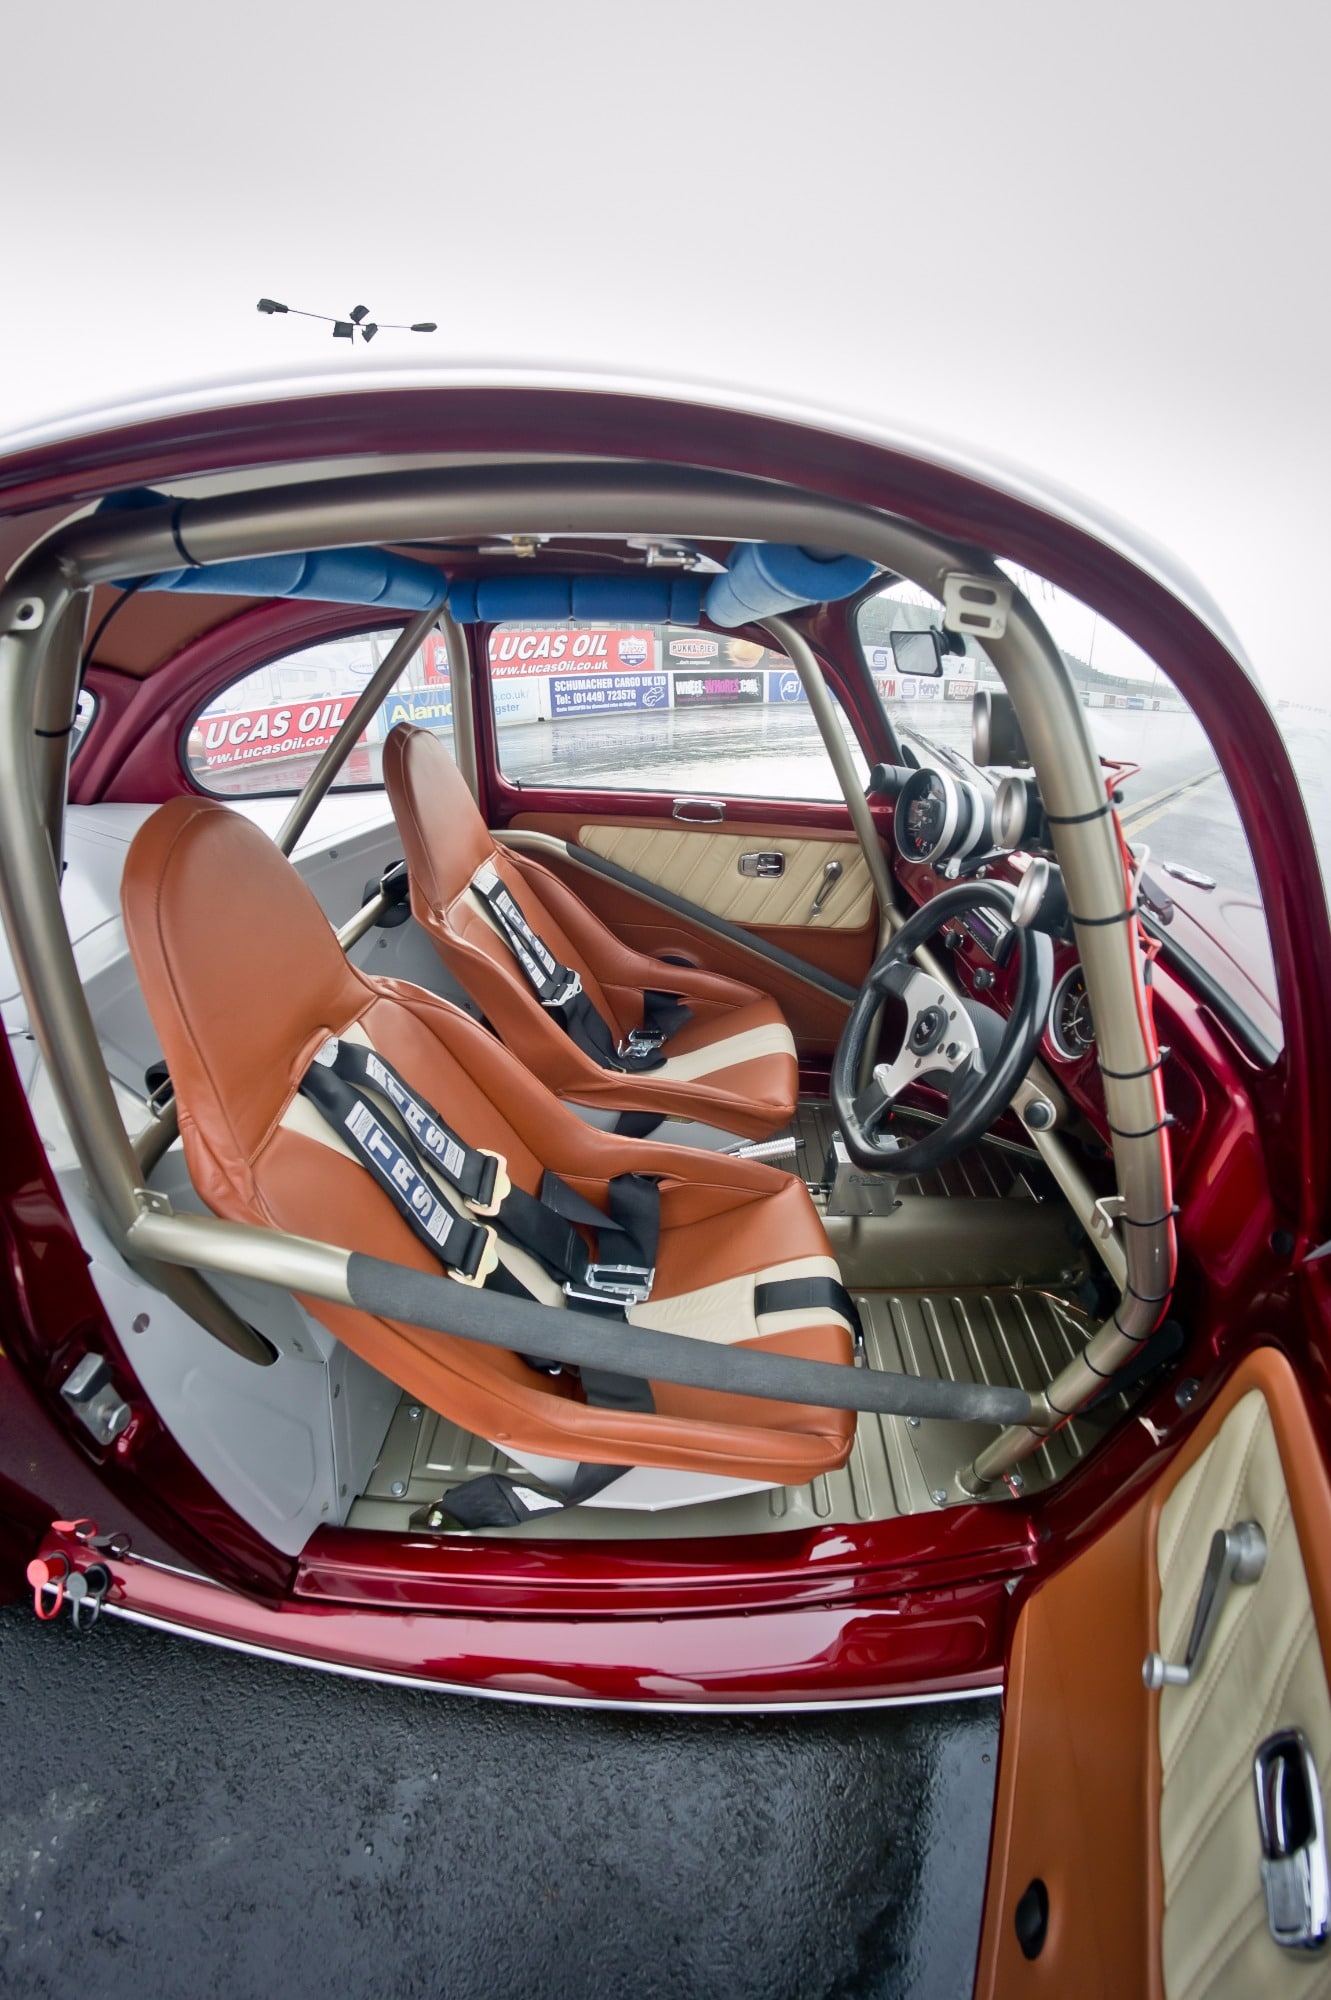 leather car seat restoration